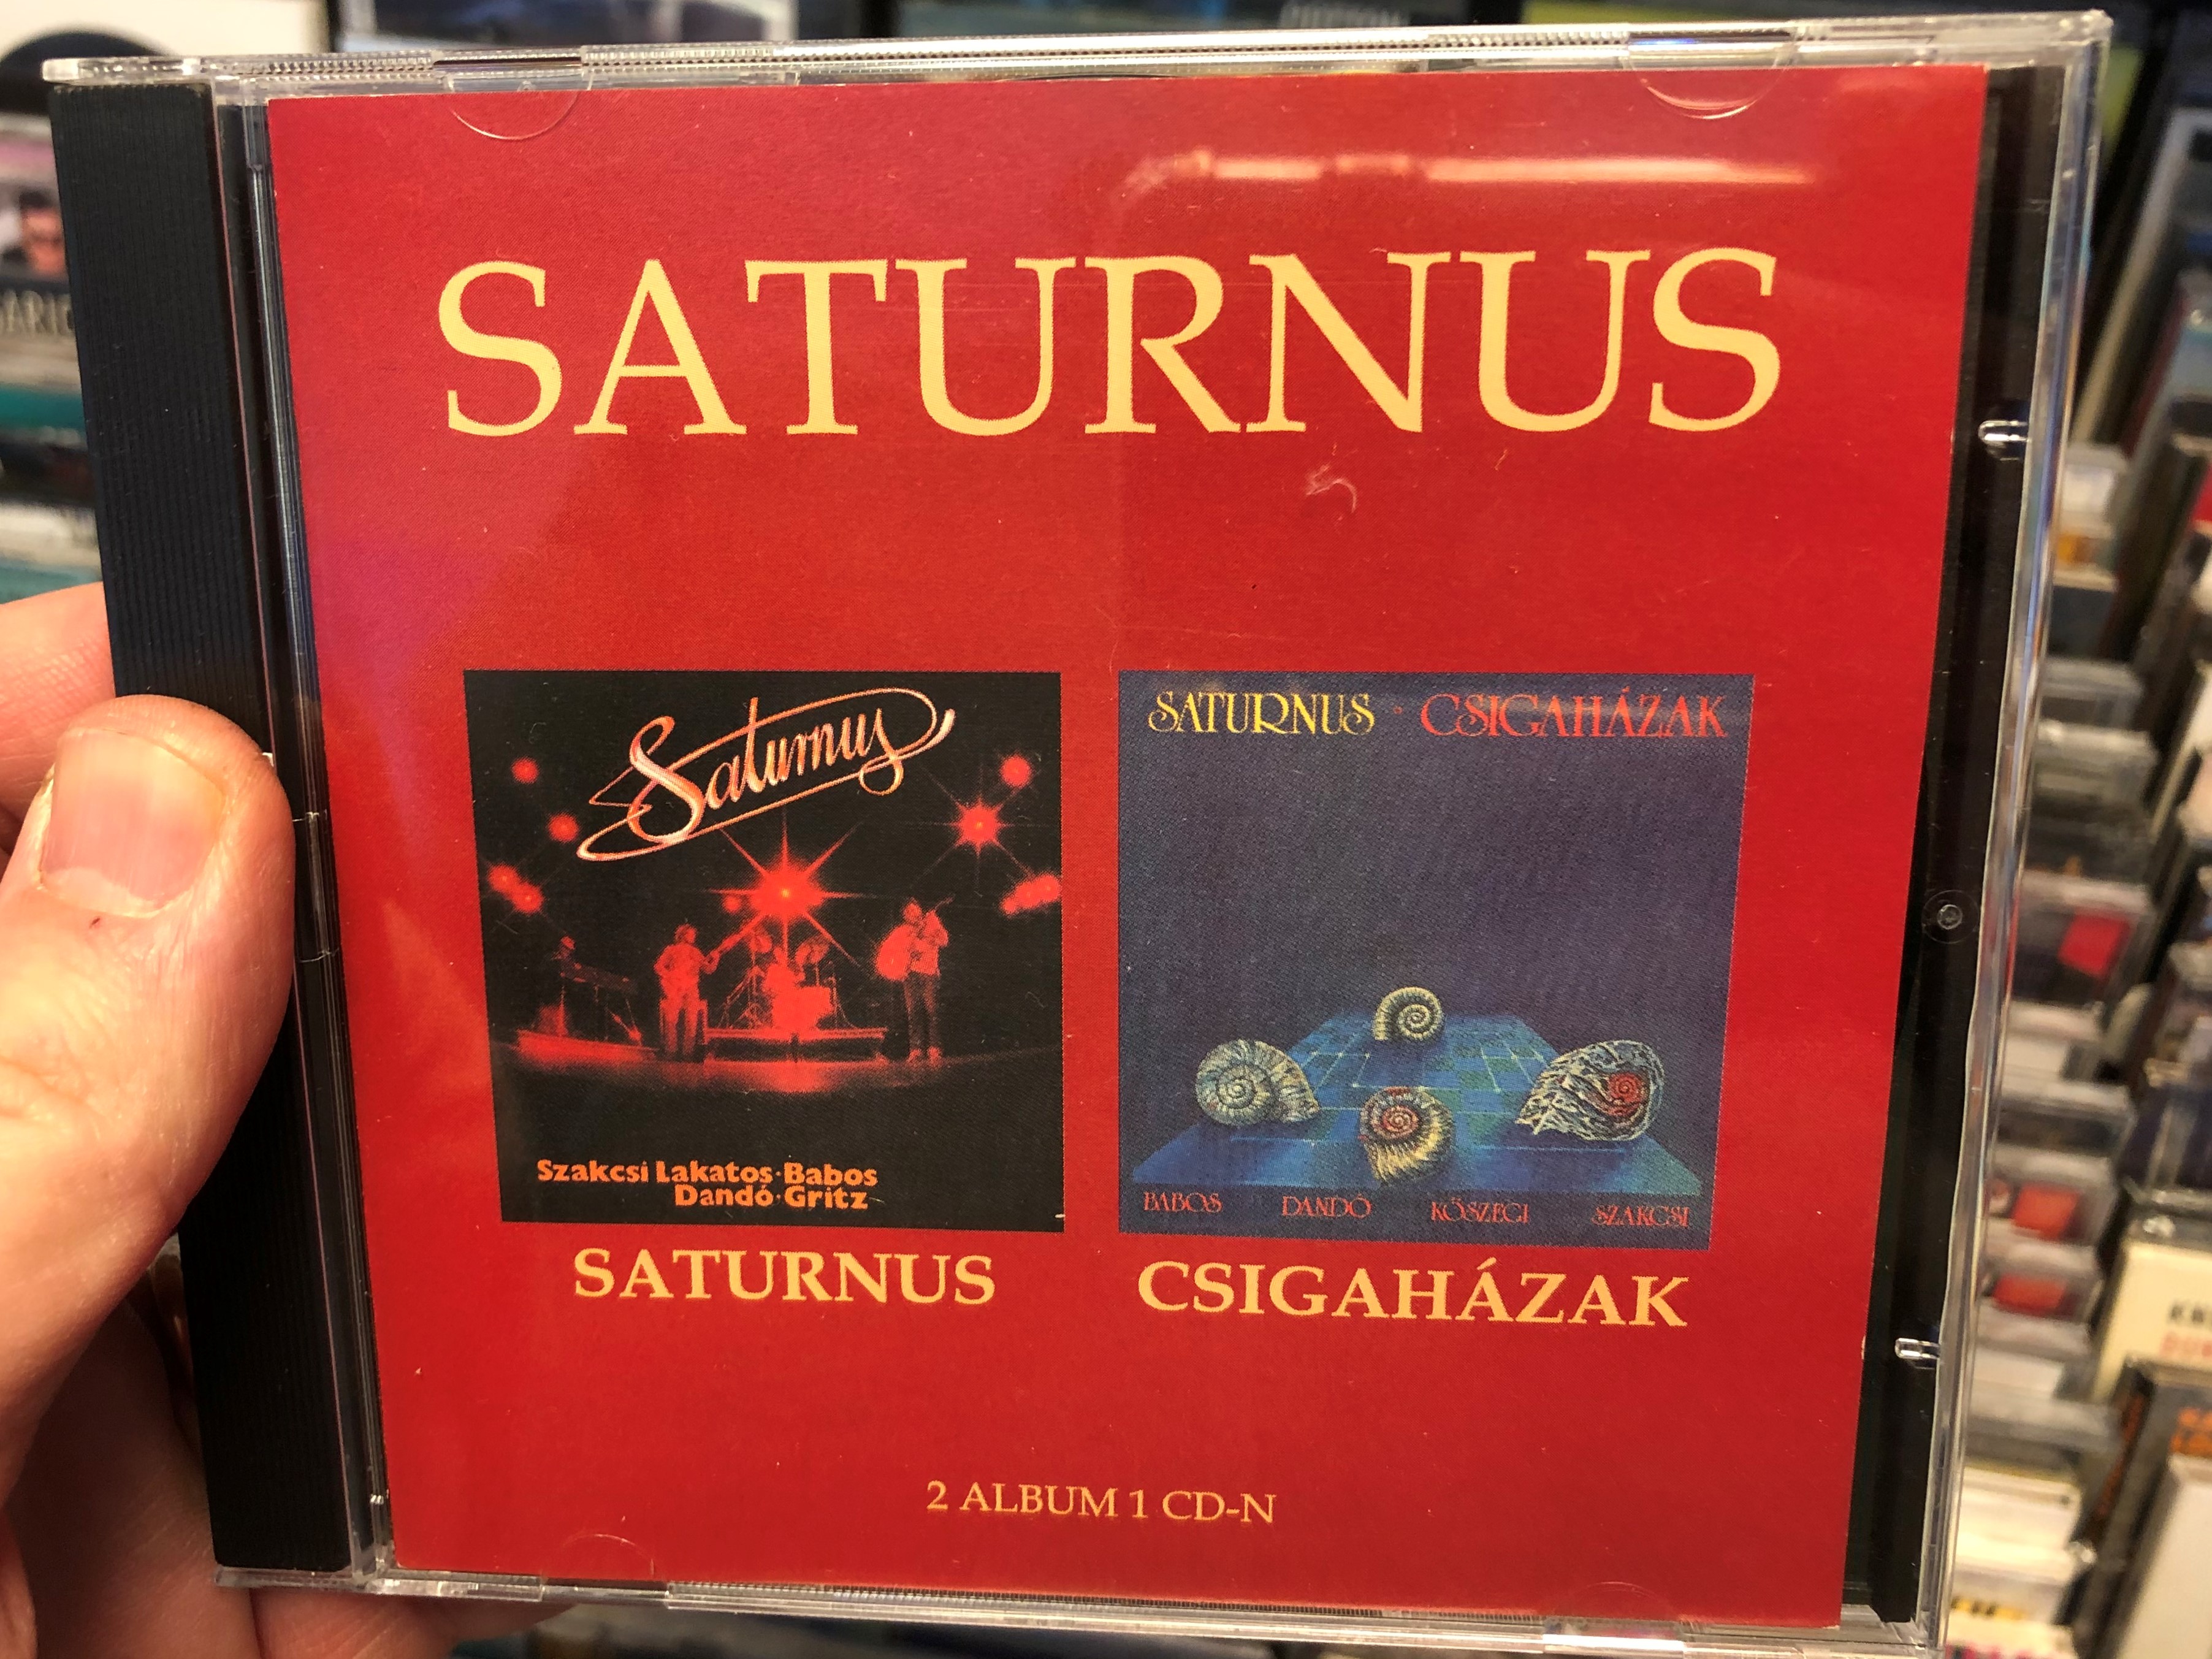 saturnus-saturnus-csigah-zak-hungaroton-audio-cd-hcd-37994-1-.jpg